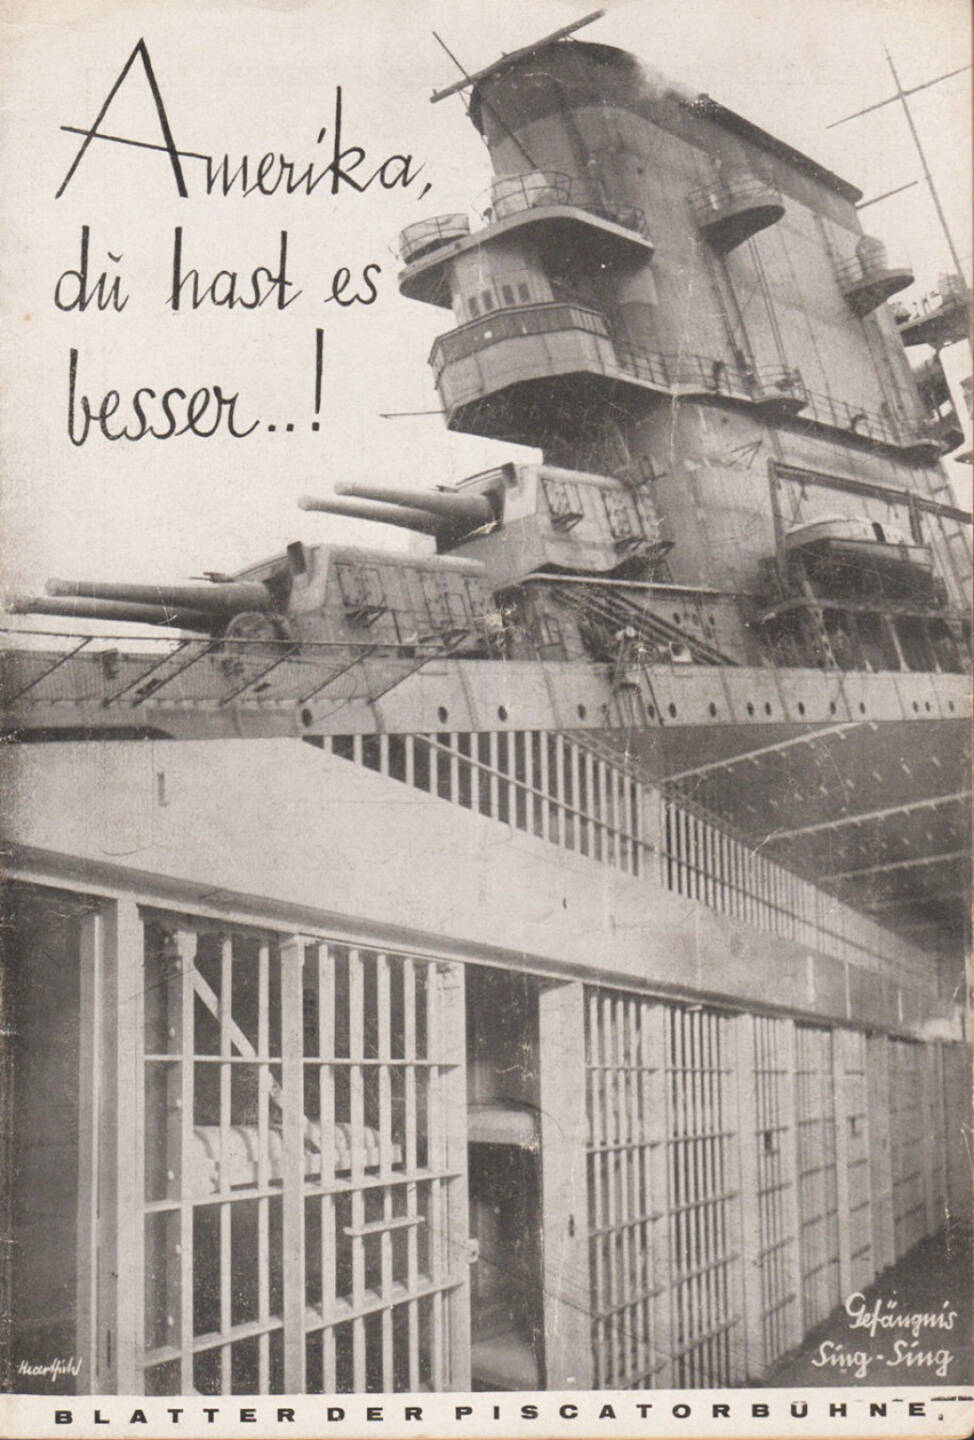 Blätter der Piscatorbühne - Amerika, Du hast es besser!, Bepa-Verlag 1928, Cover - http://josefchladek.com/book/blatter_der_piscatorbuhne_-_amerika_du_hast_es_besser